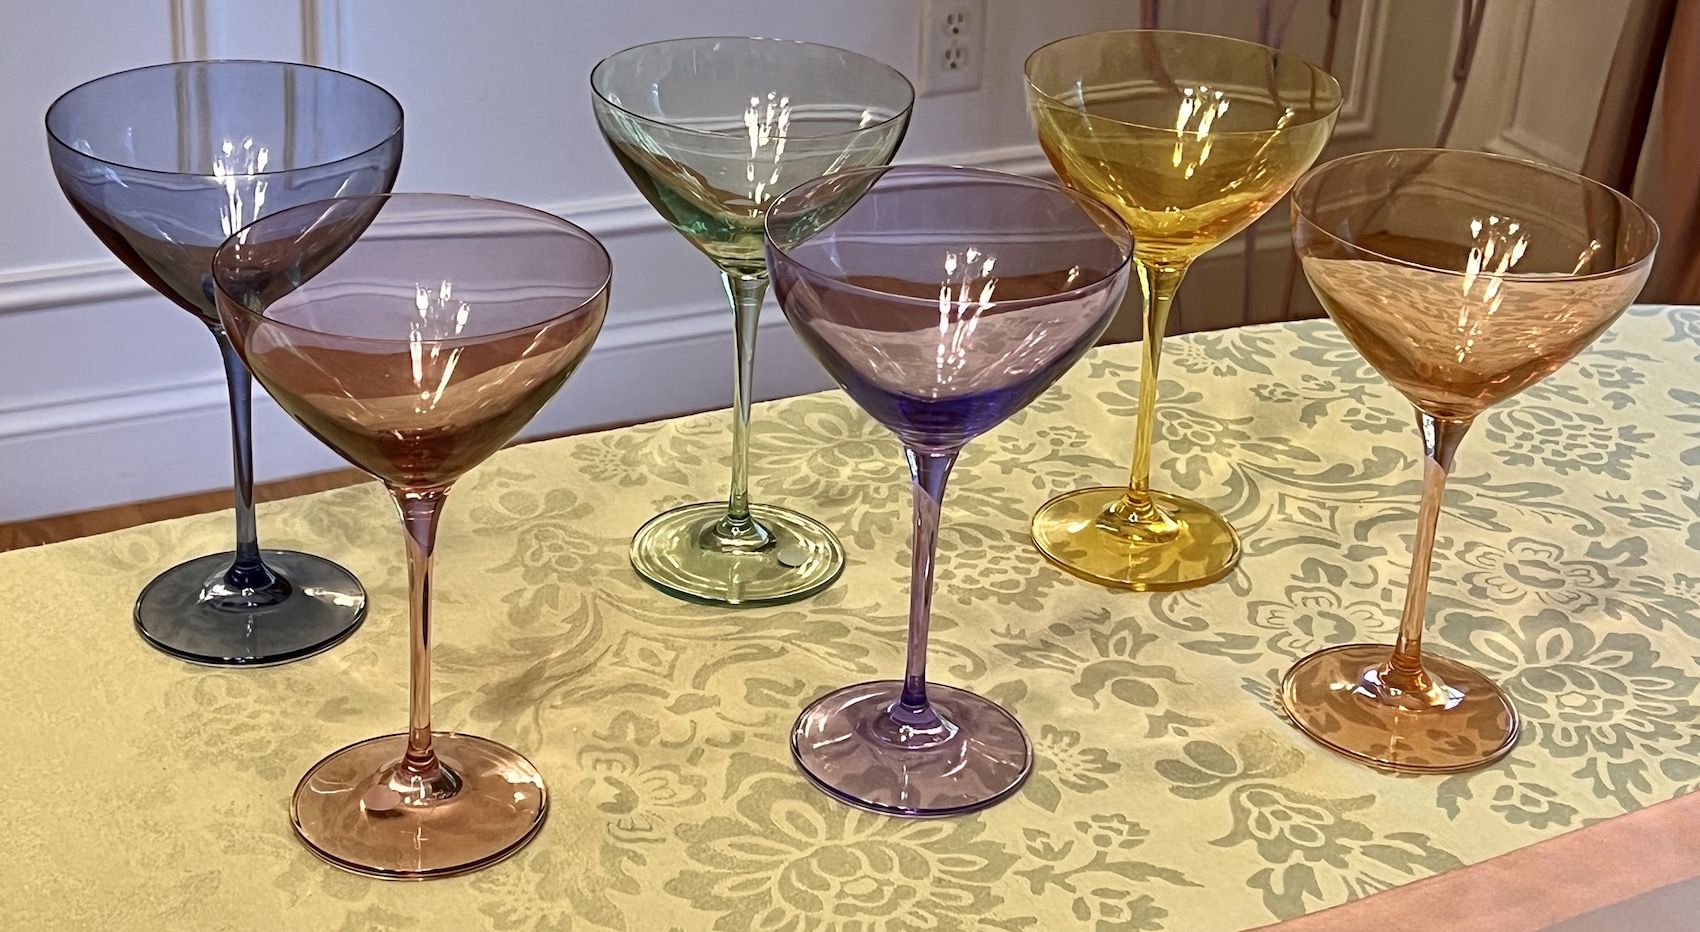 Estelle Colored Champagne Flute - Set of 6 {Pastel Mixed Set